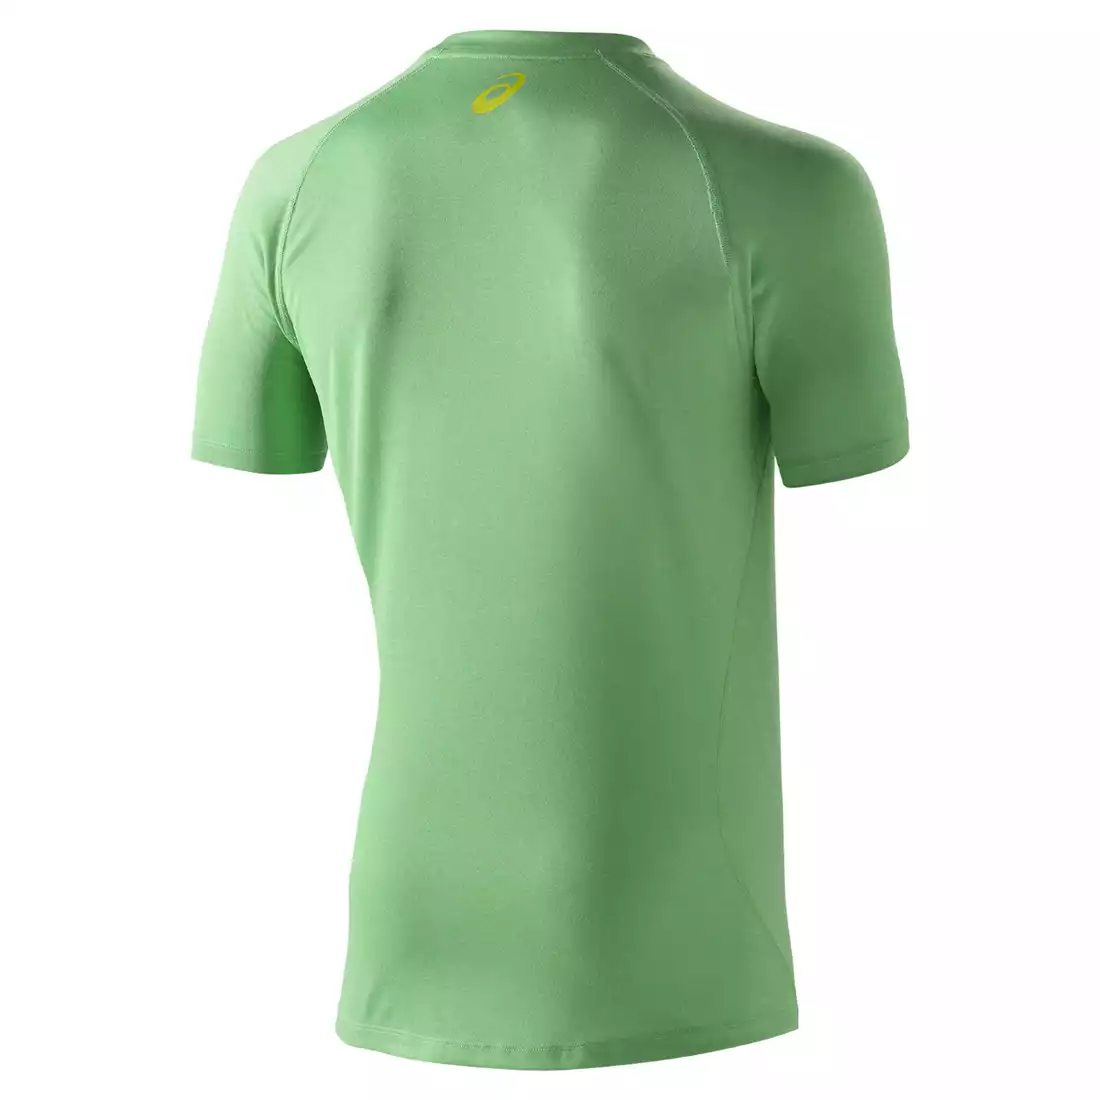 ASICS 110519-0489 SOUKAI GRAPHIC TOP - męska koszulka do biegania, kolor: Zielony